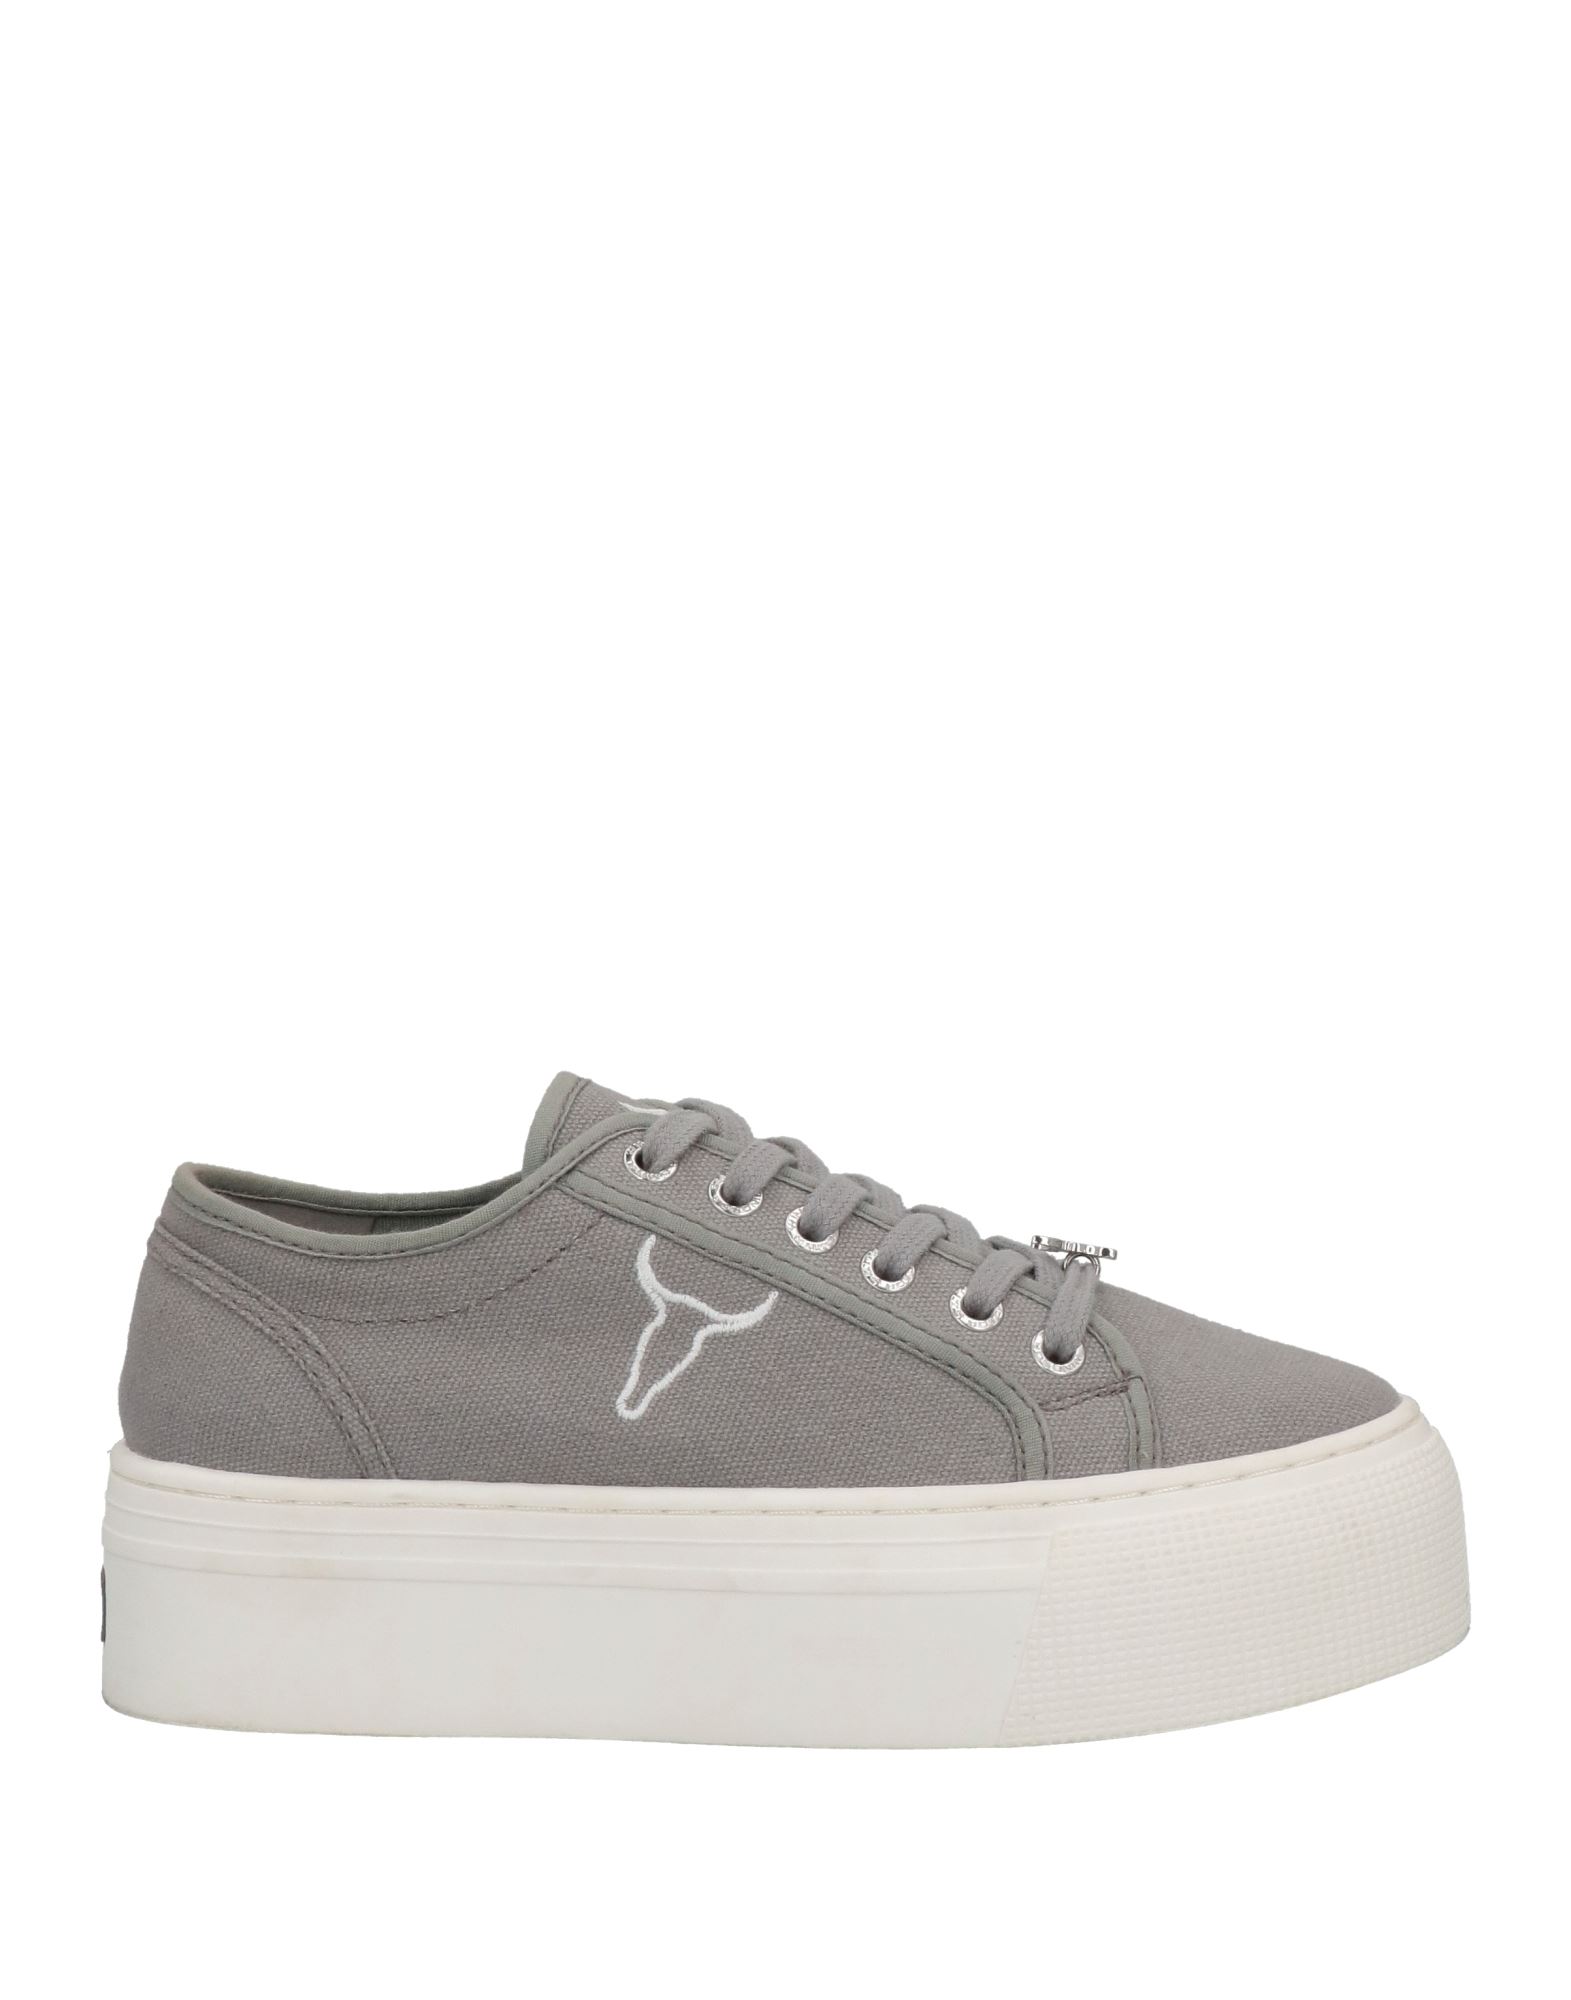 Windsor Smith Sneakers In Grey